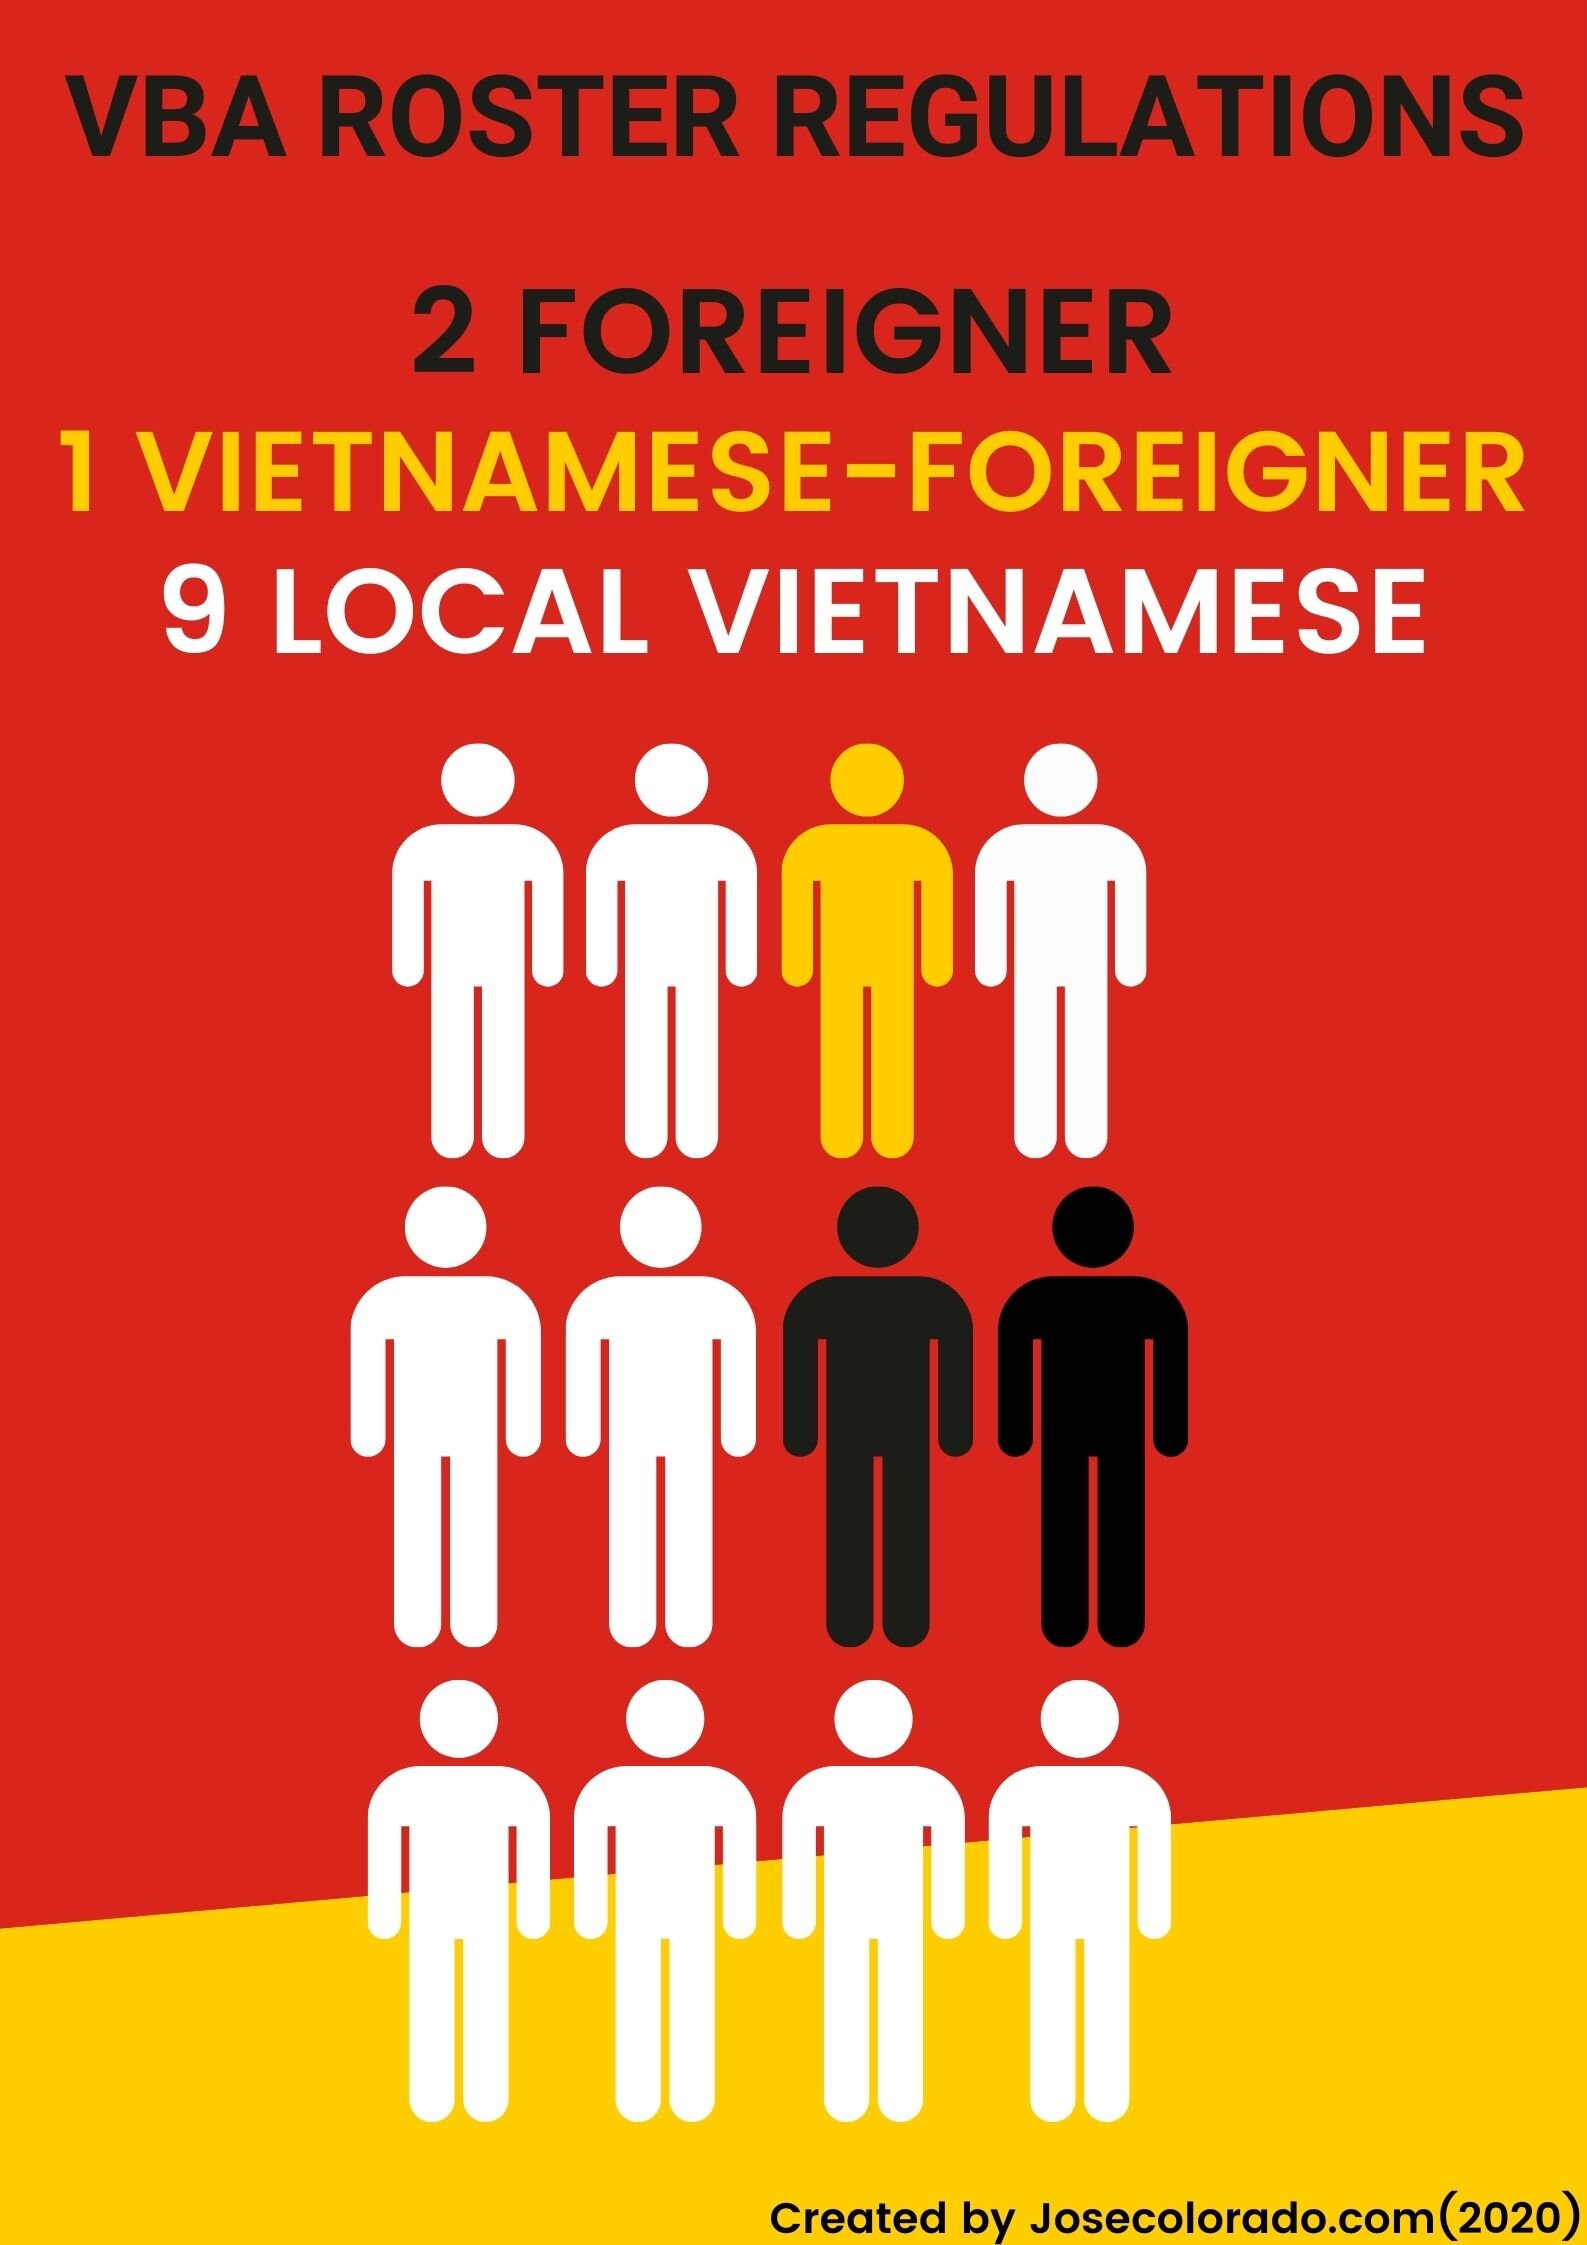 Vietnamese roster regulations impact VBA salaries a great deal.